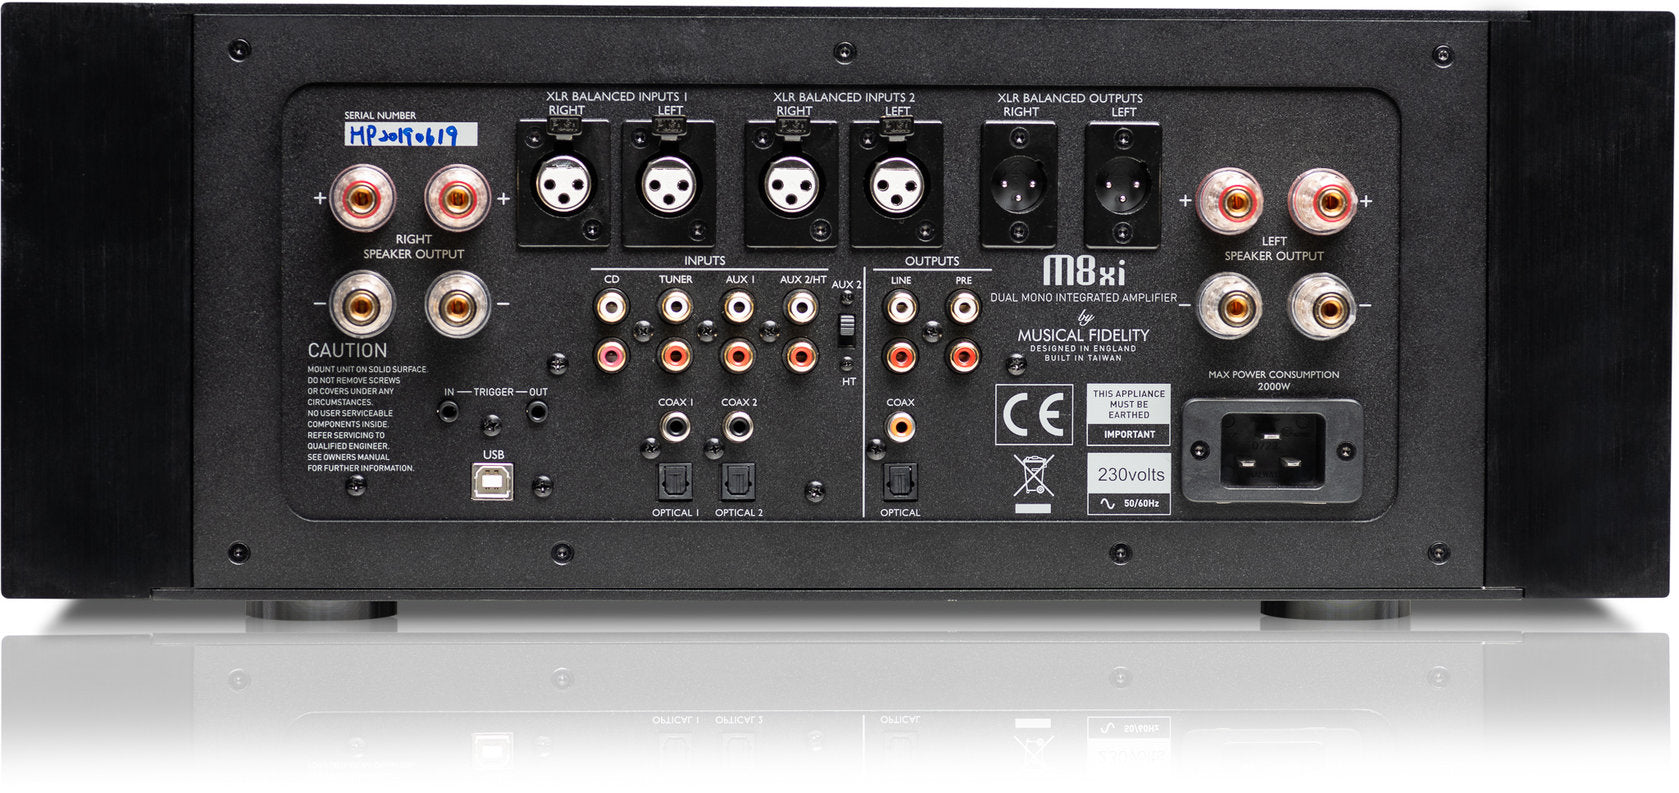 Musical Fidelity M8xi amplifier